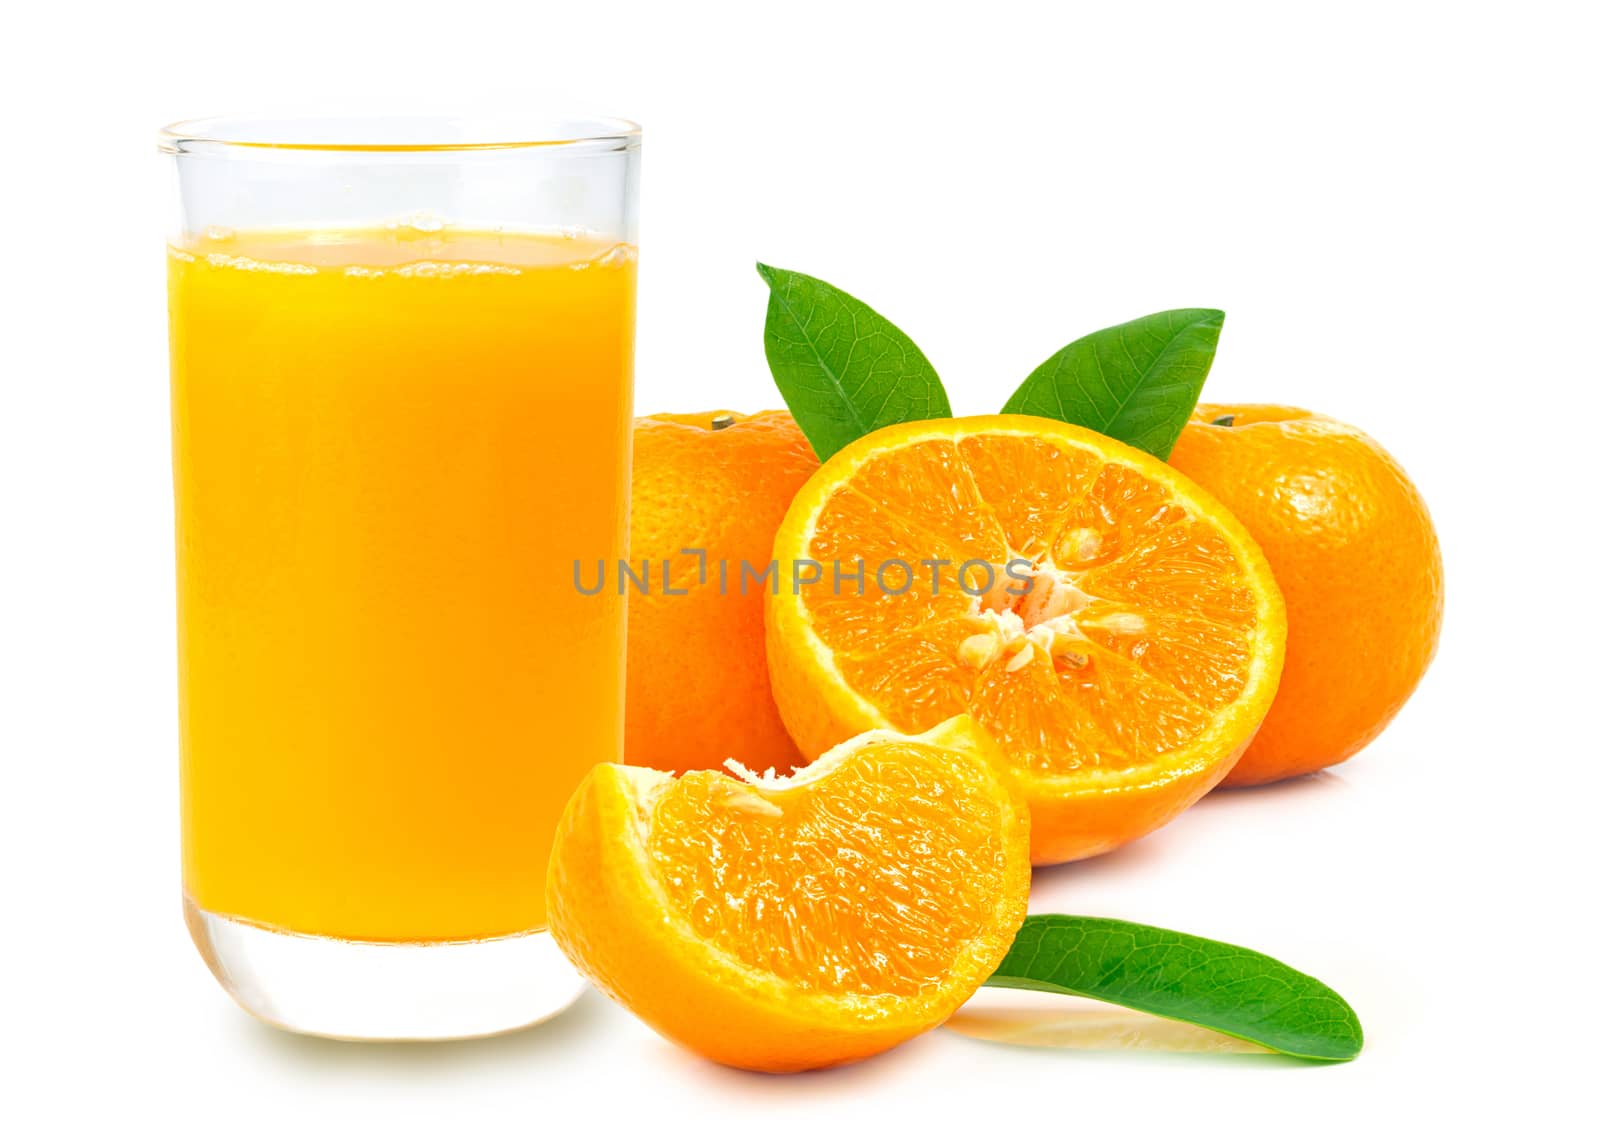 Orange juice and fruits on a white background